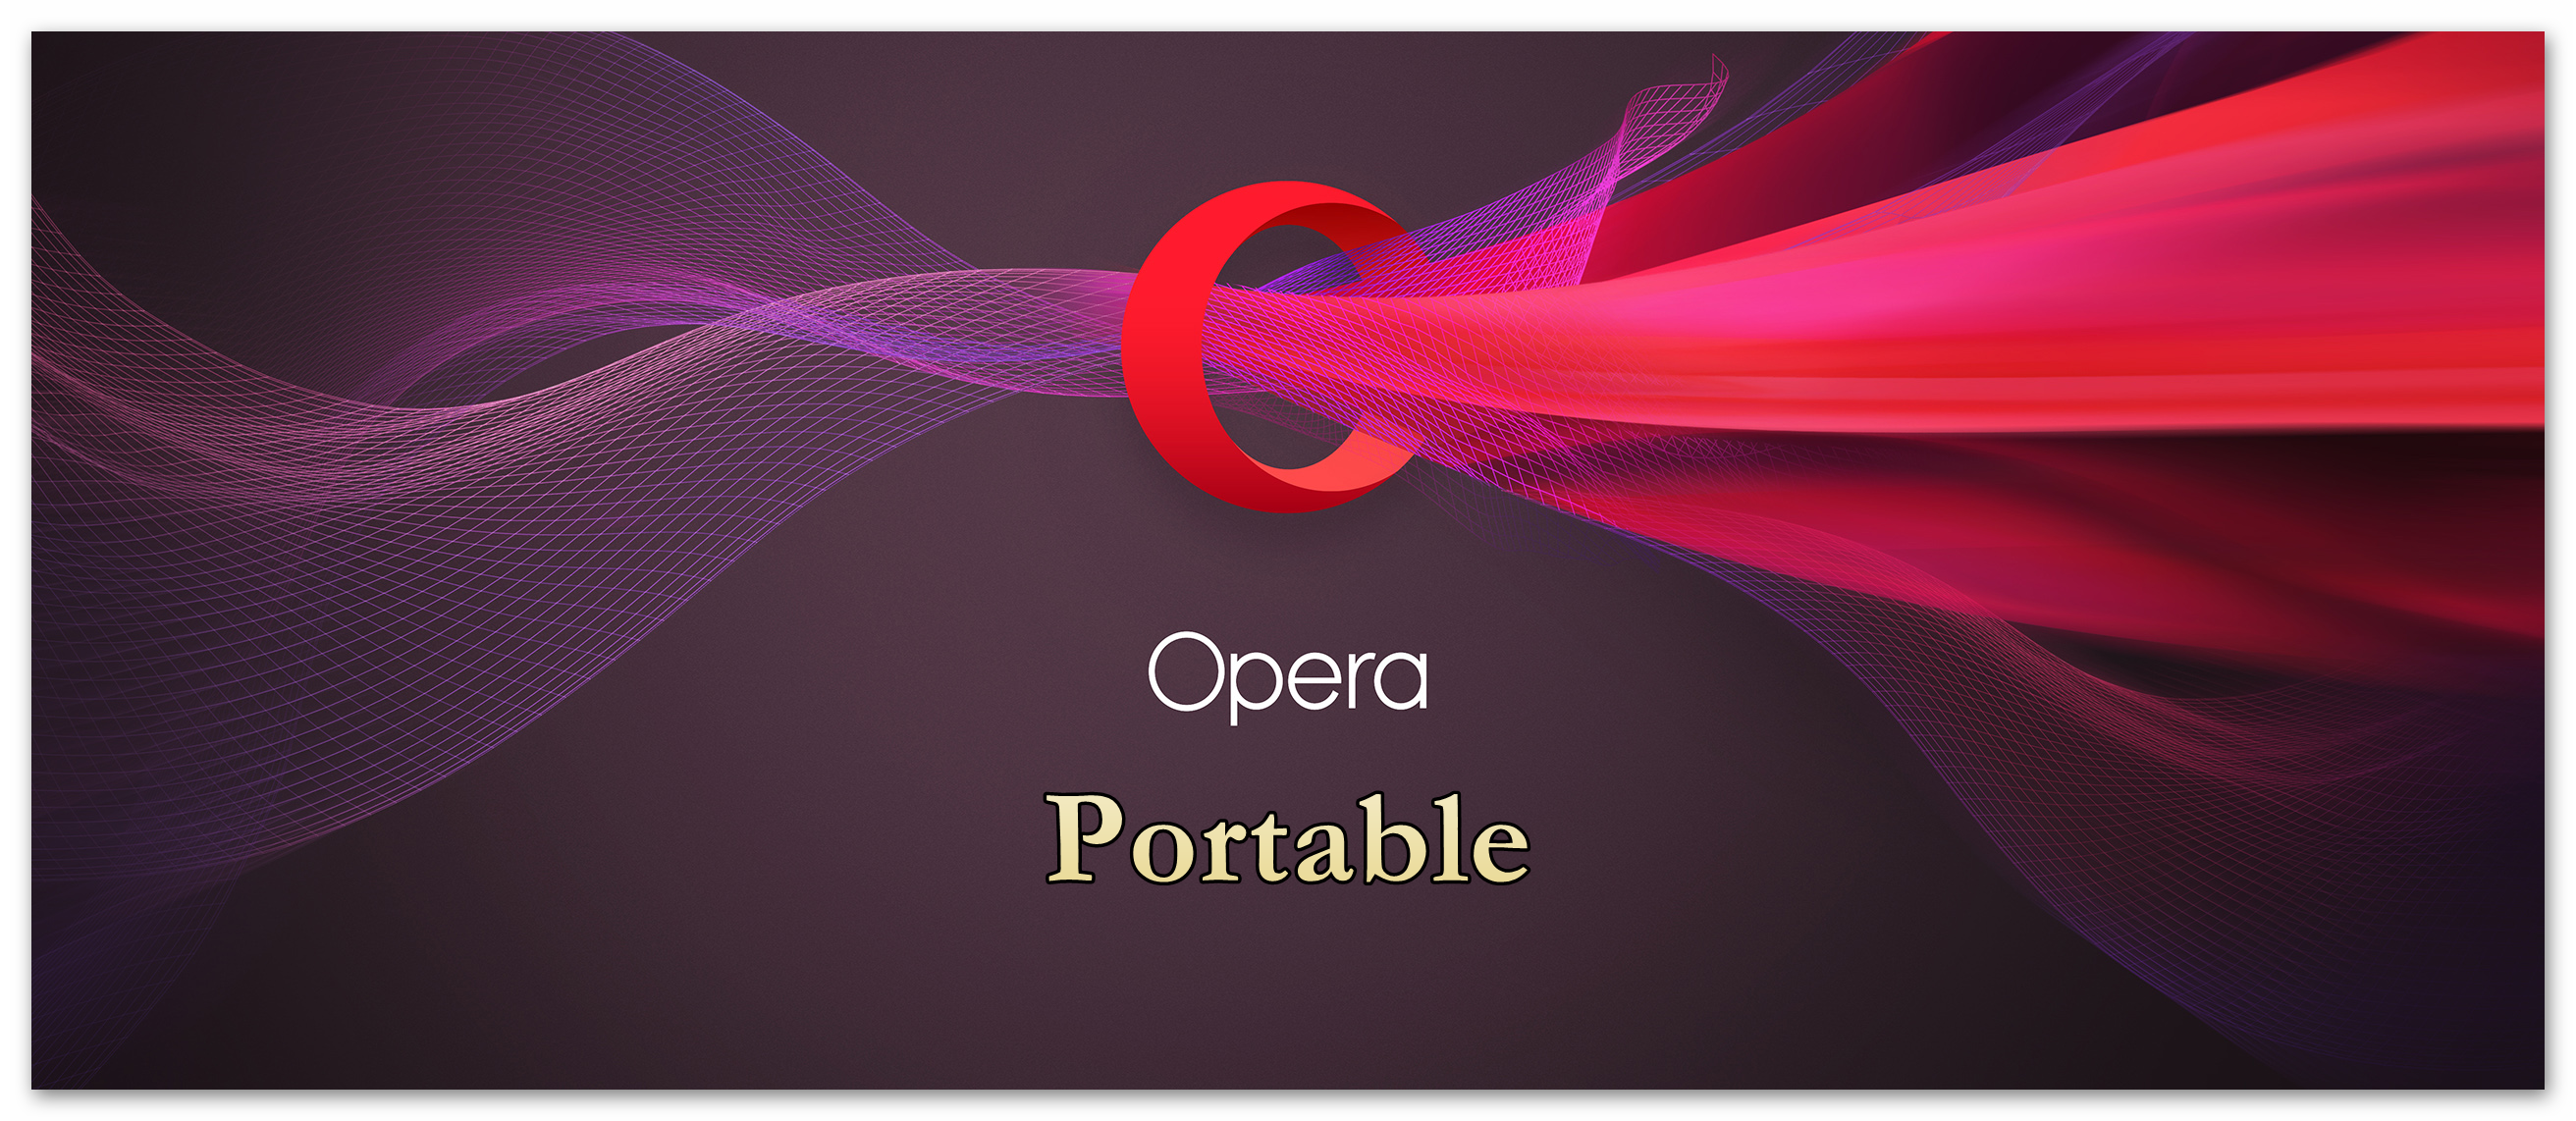 Картинка Opera Portable